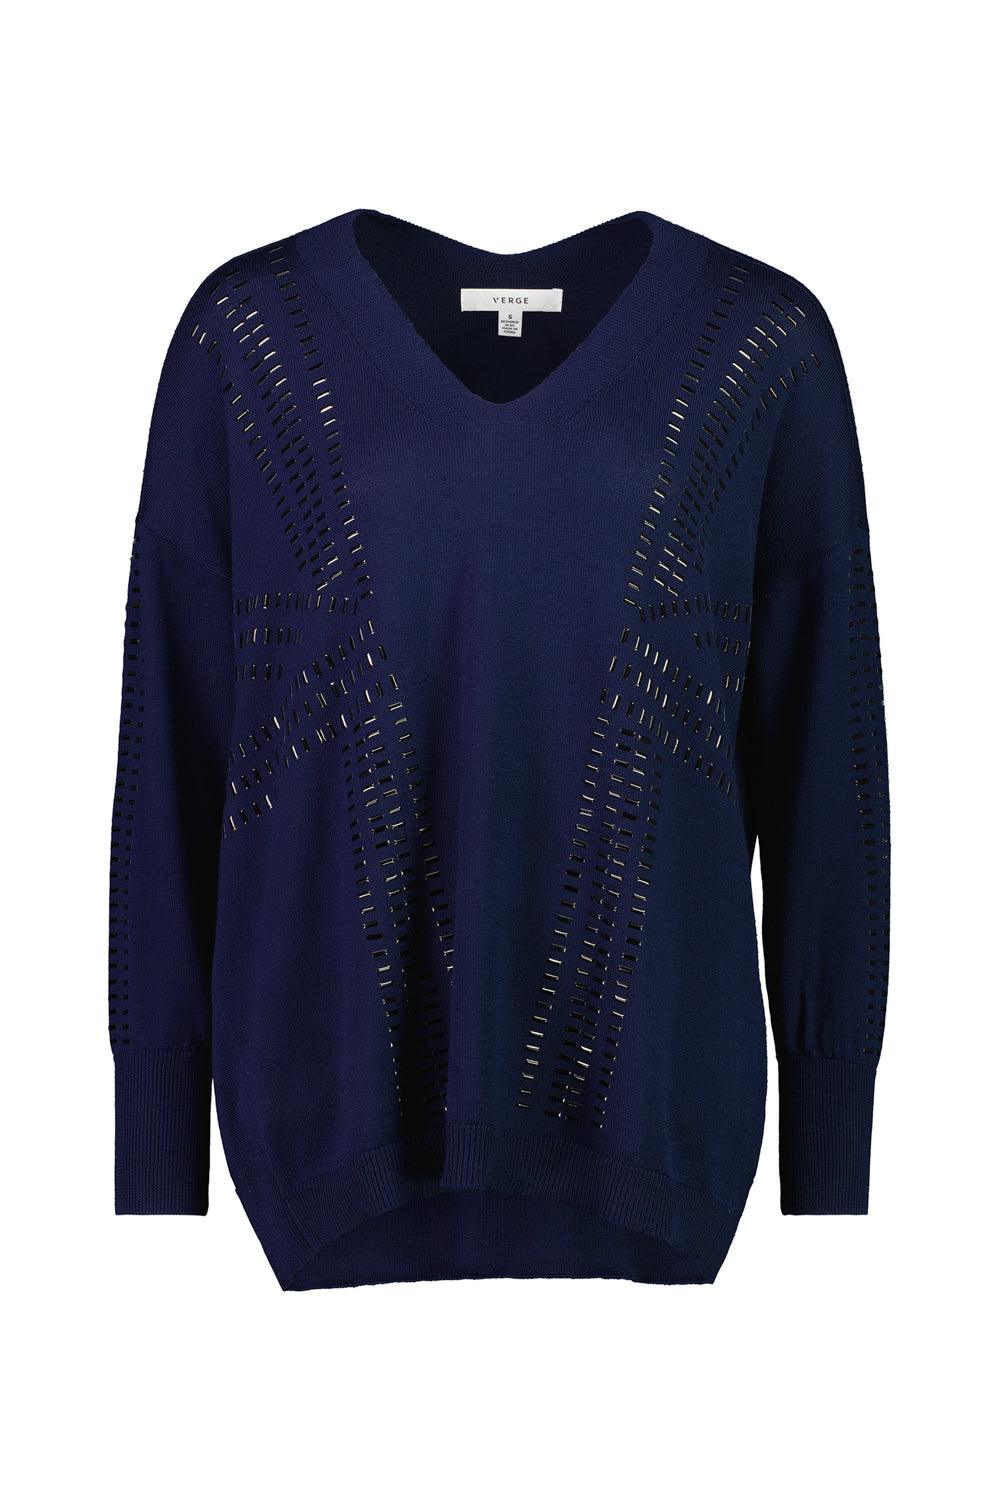 Sundown Sweater - French Ink - Sweater VERGE